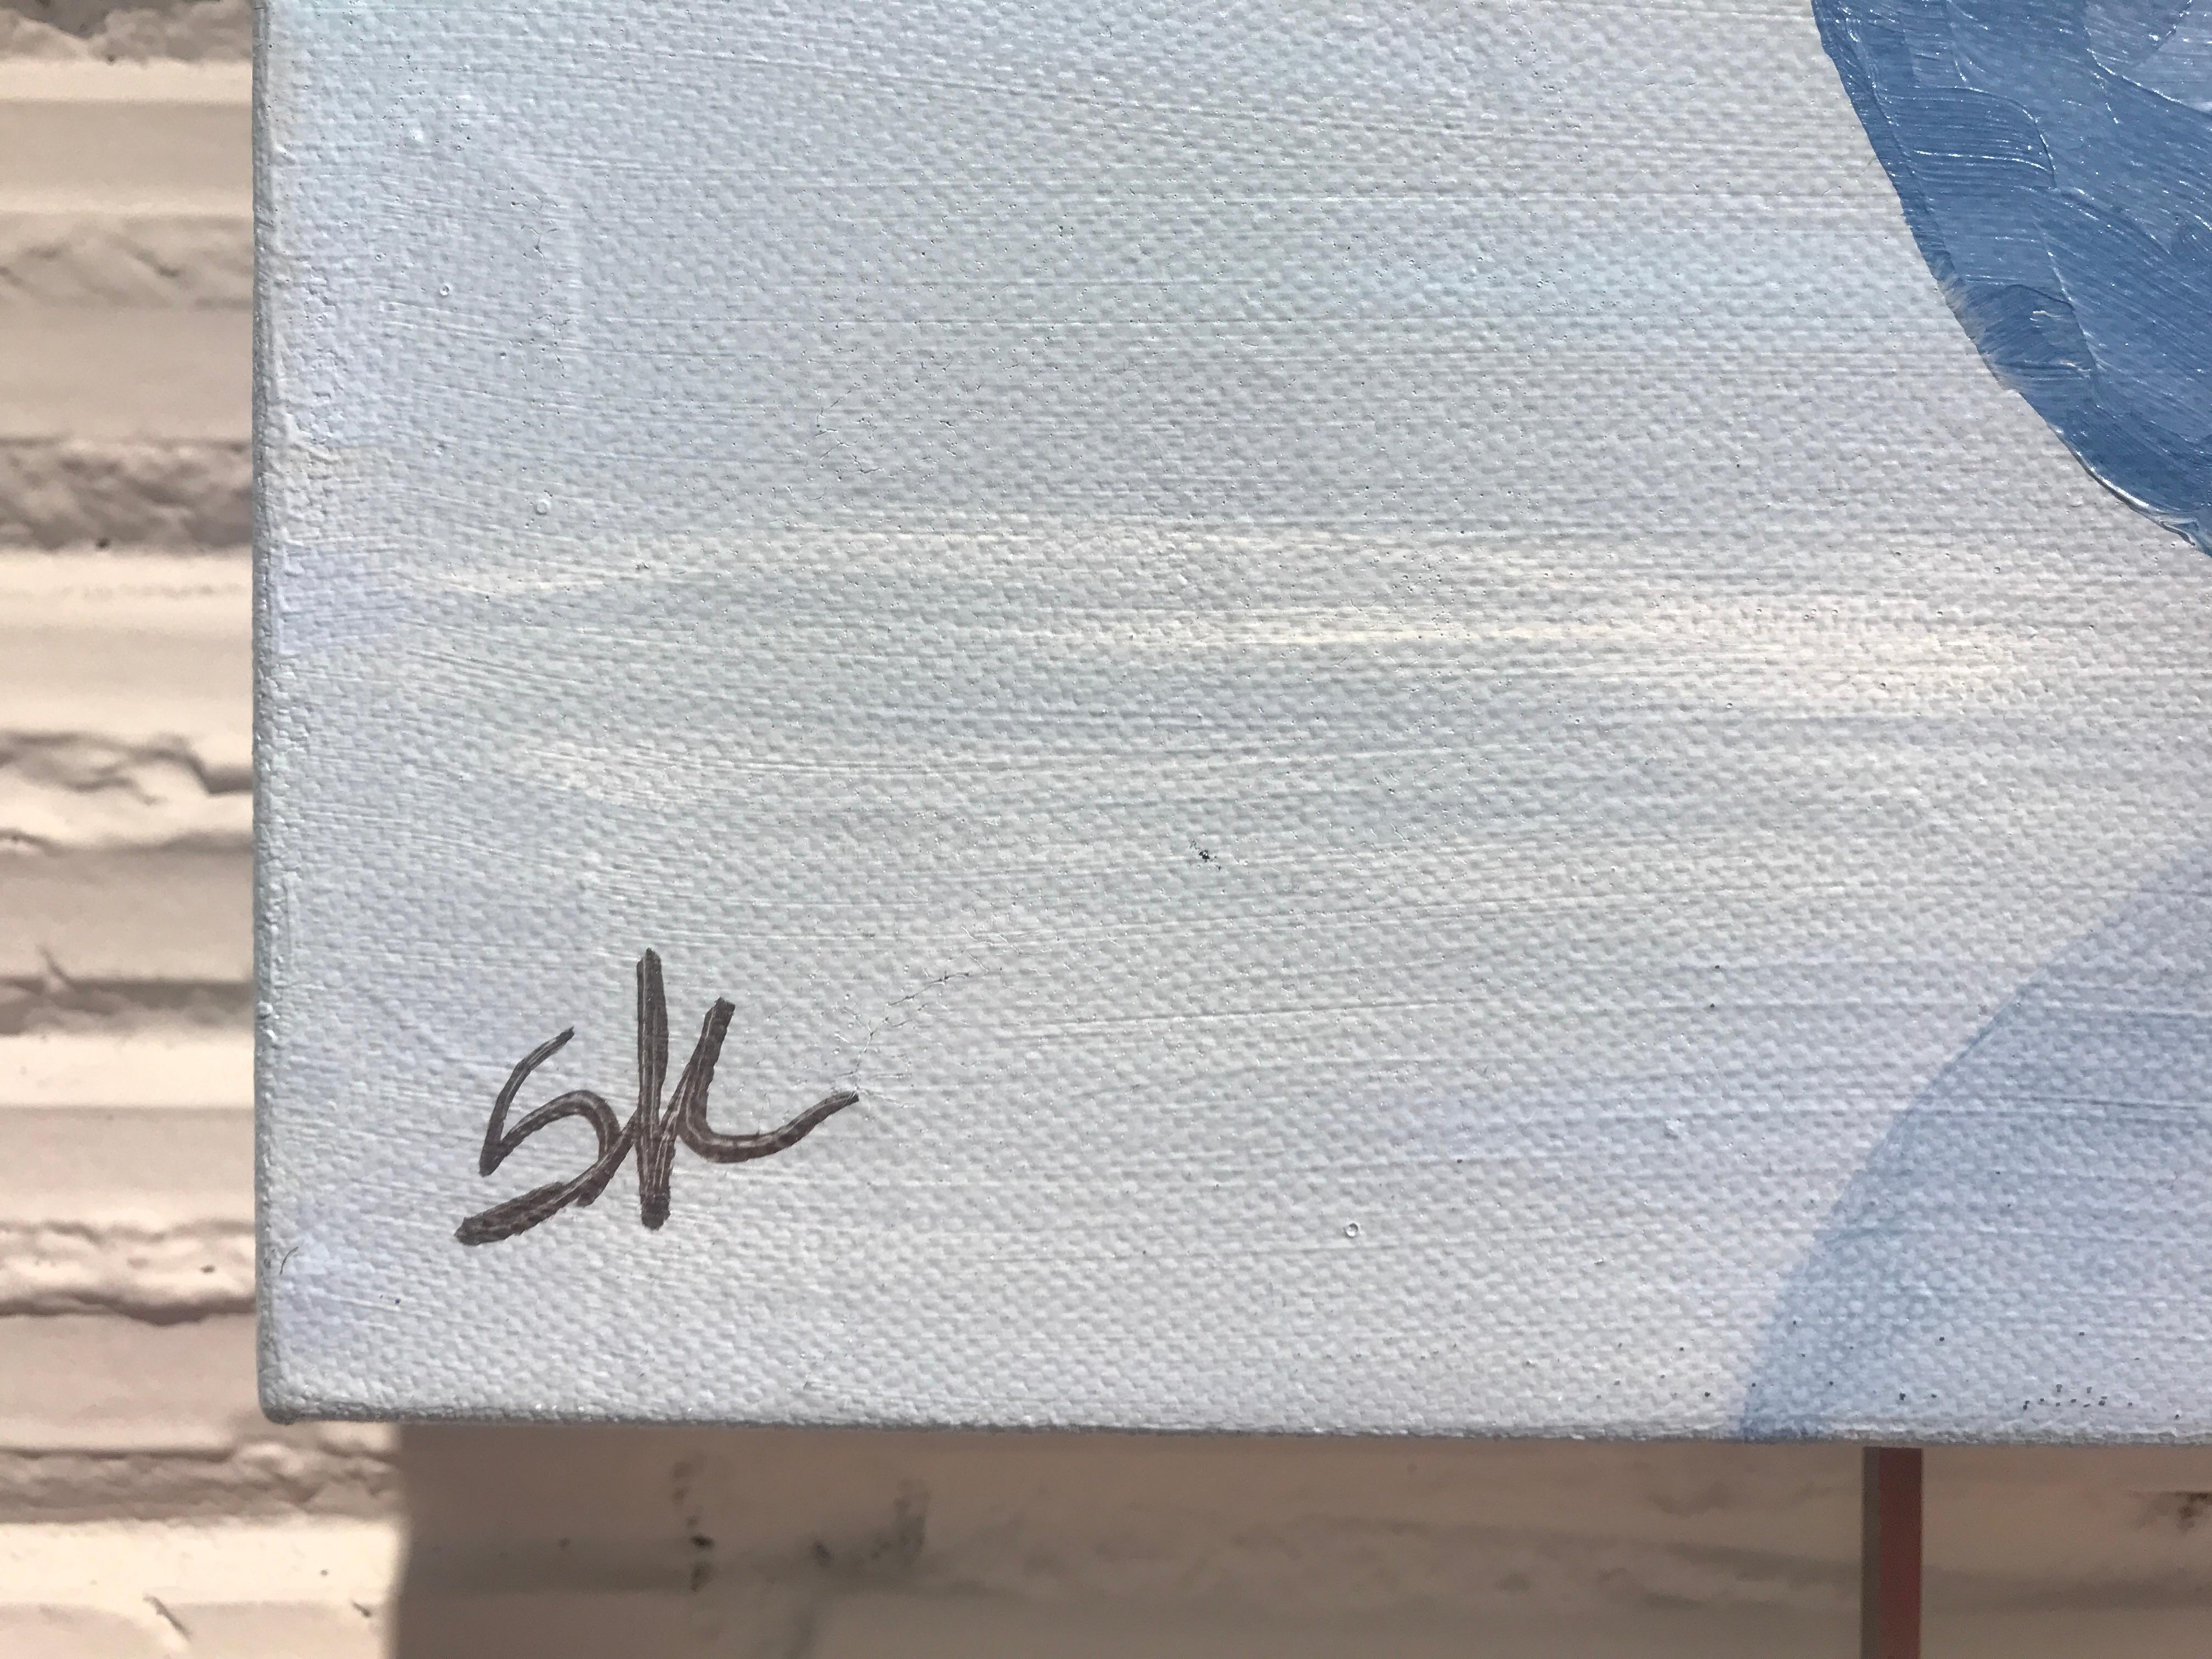 Lemon in Blue, Susan Kinsella Small Contemporary Still-Life Painting 2